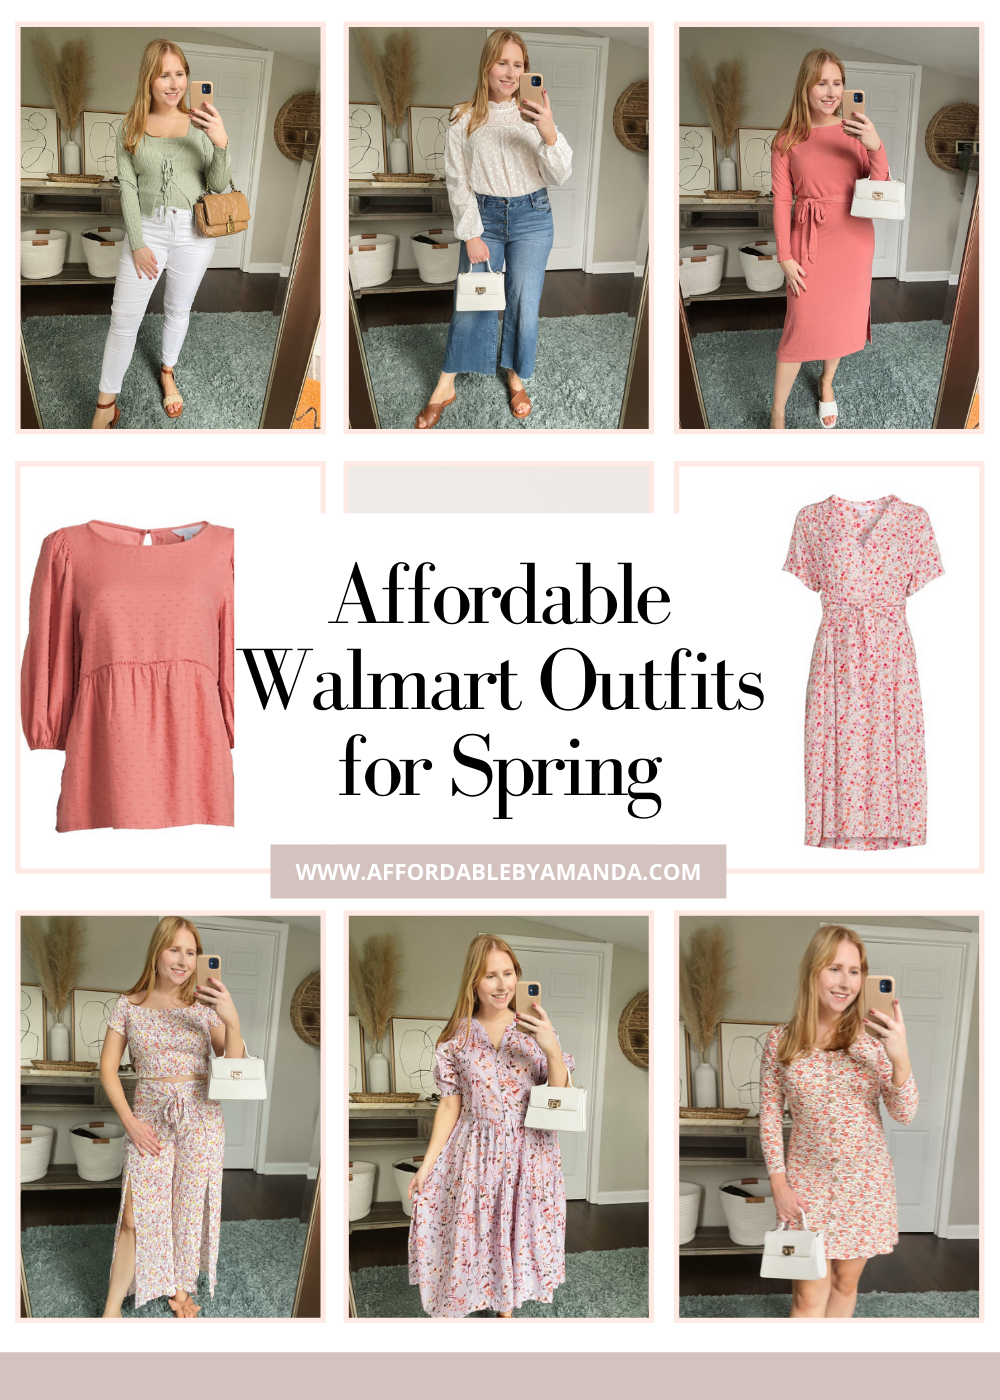 Summer Clothing Haul from Walmart - Affordable by Amanda